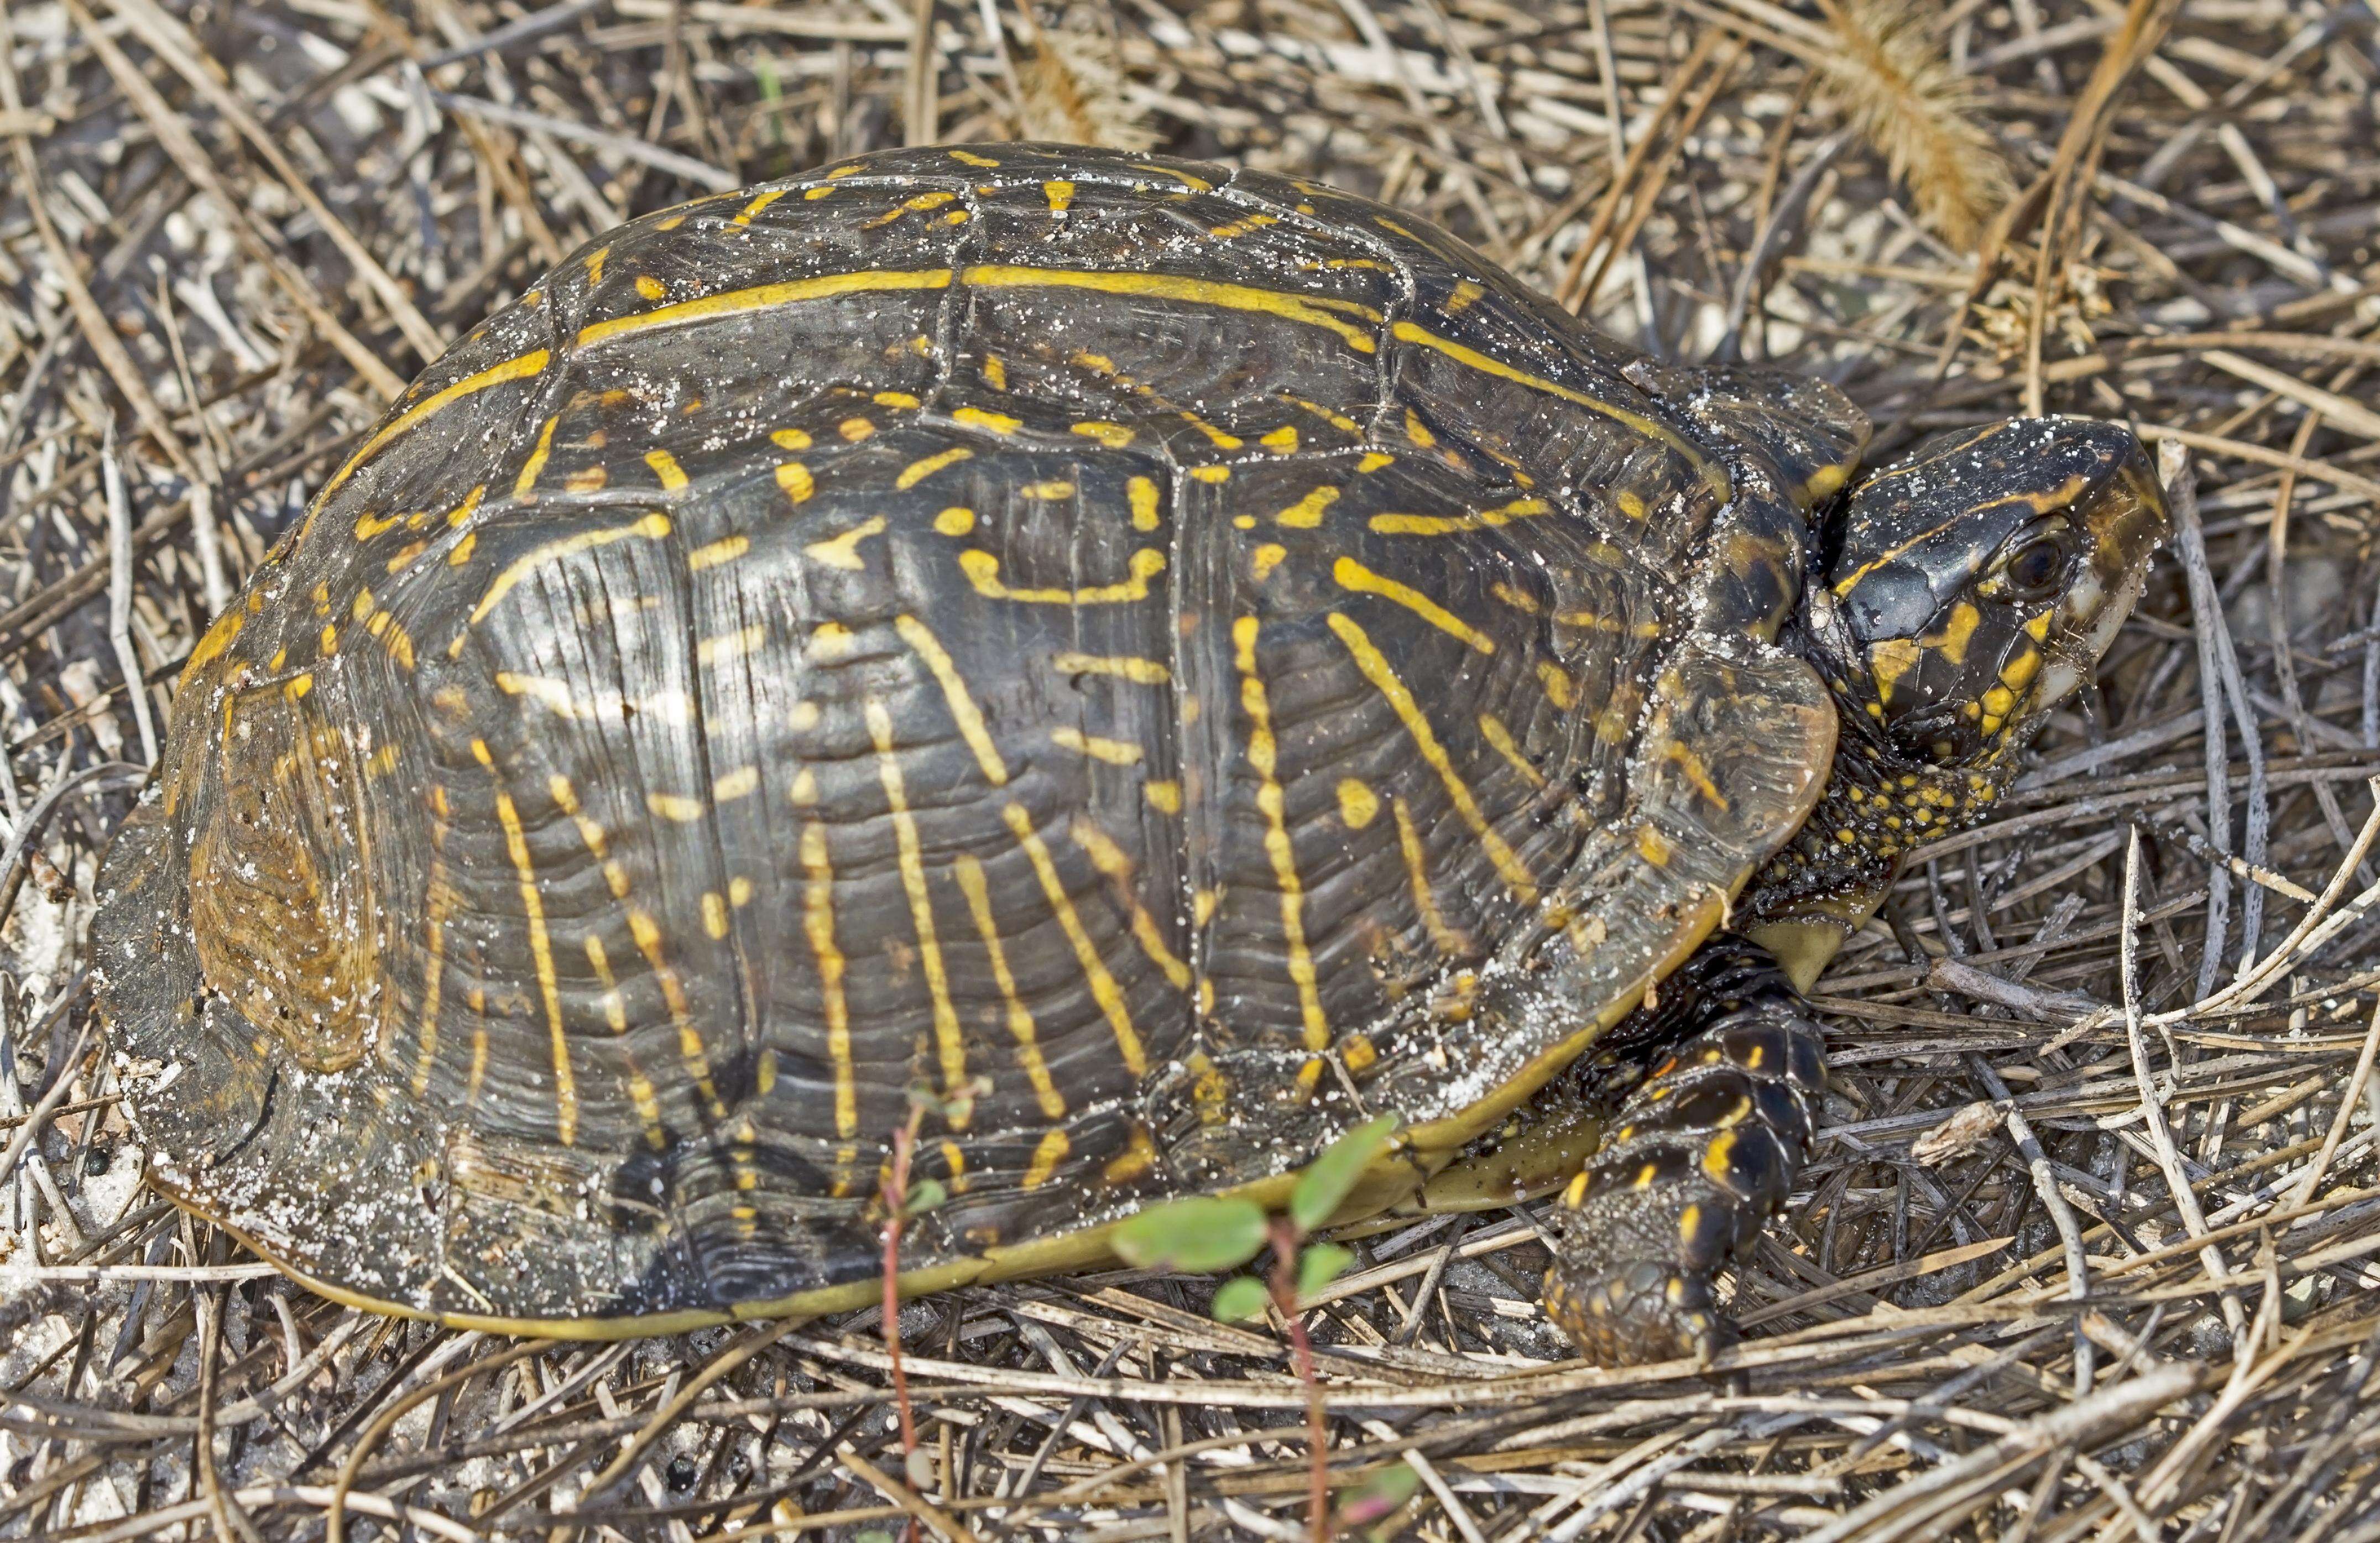 Image of box turtle